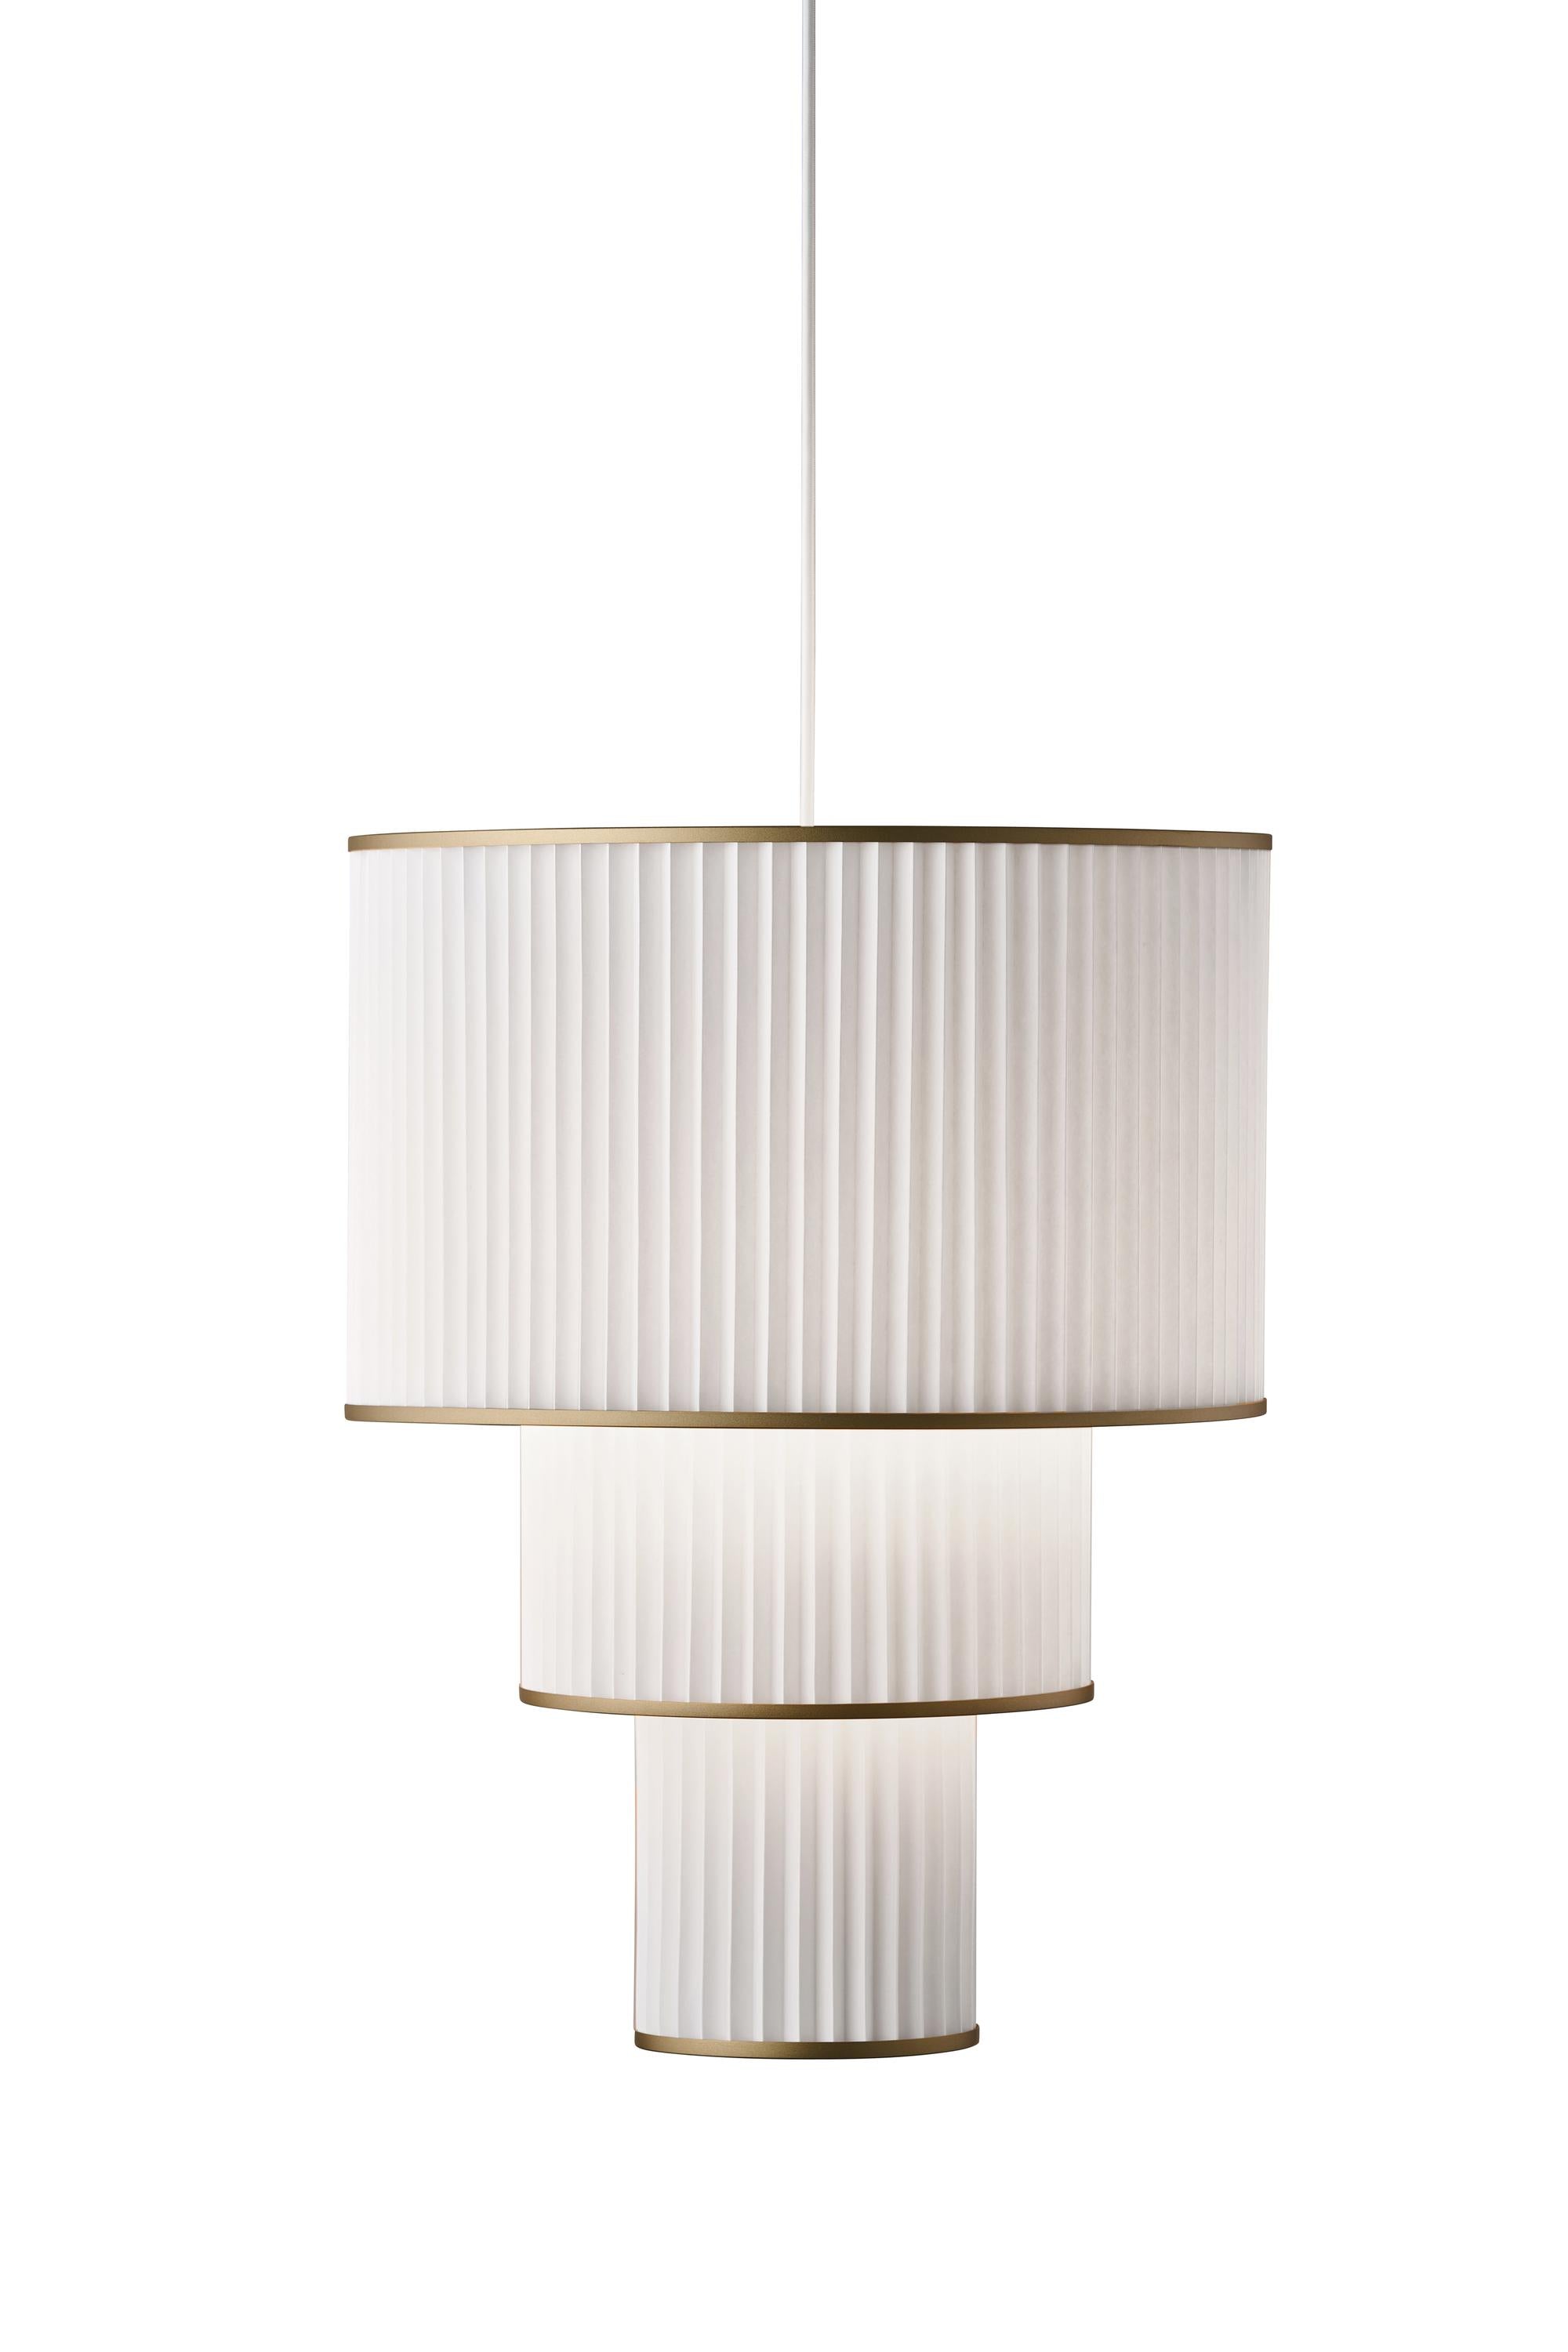 Le Klint Plivello Suspension Lamp Golden/White med 3 nyanser (S M L)